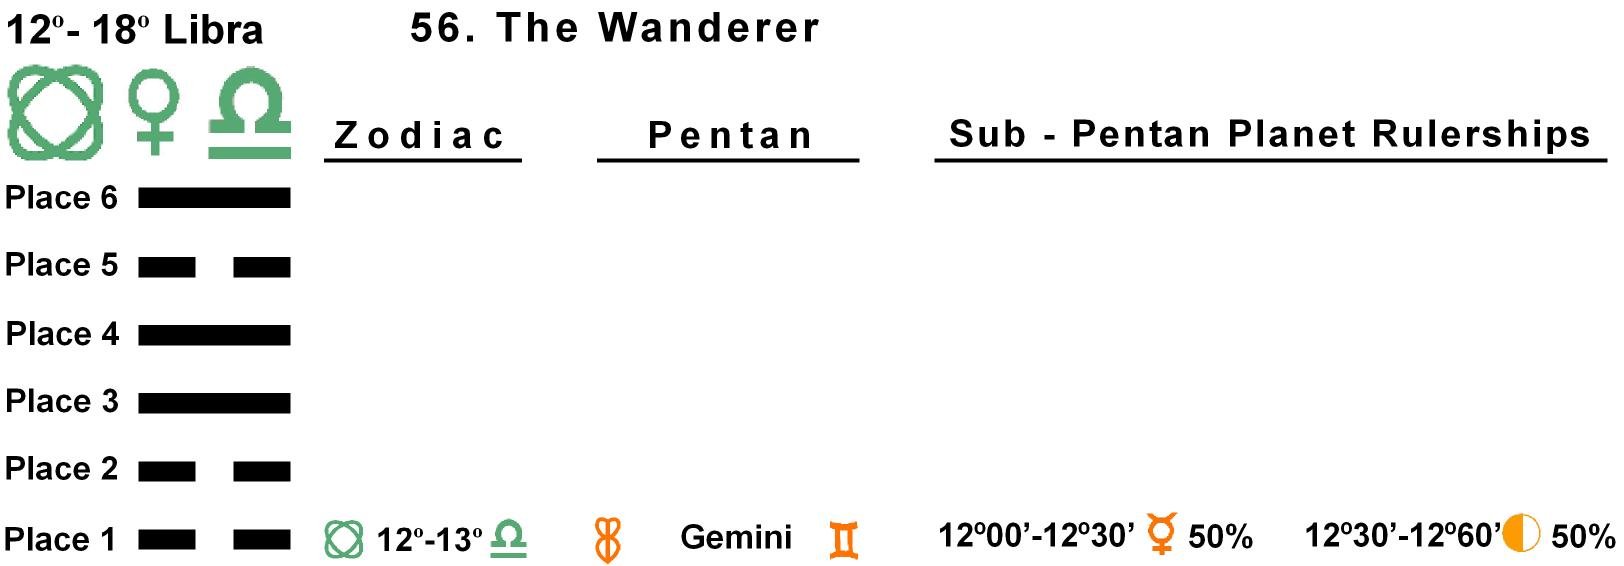 Pent-lines-07LI 12-13 Hx-56 The Wanderer